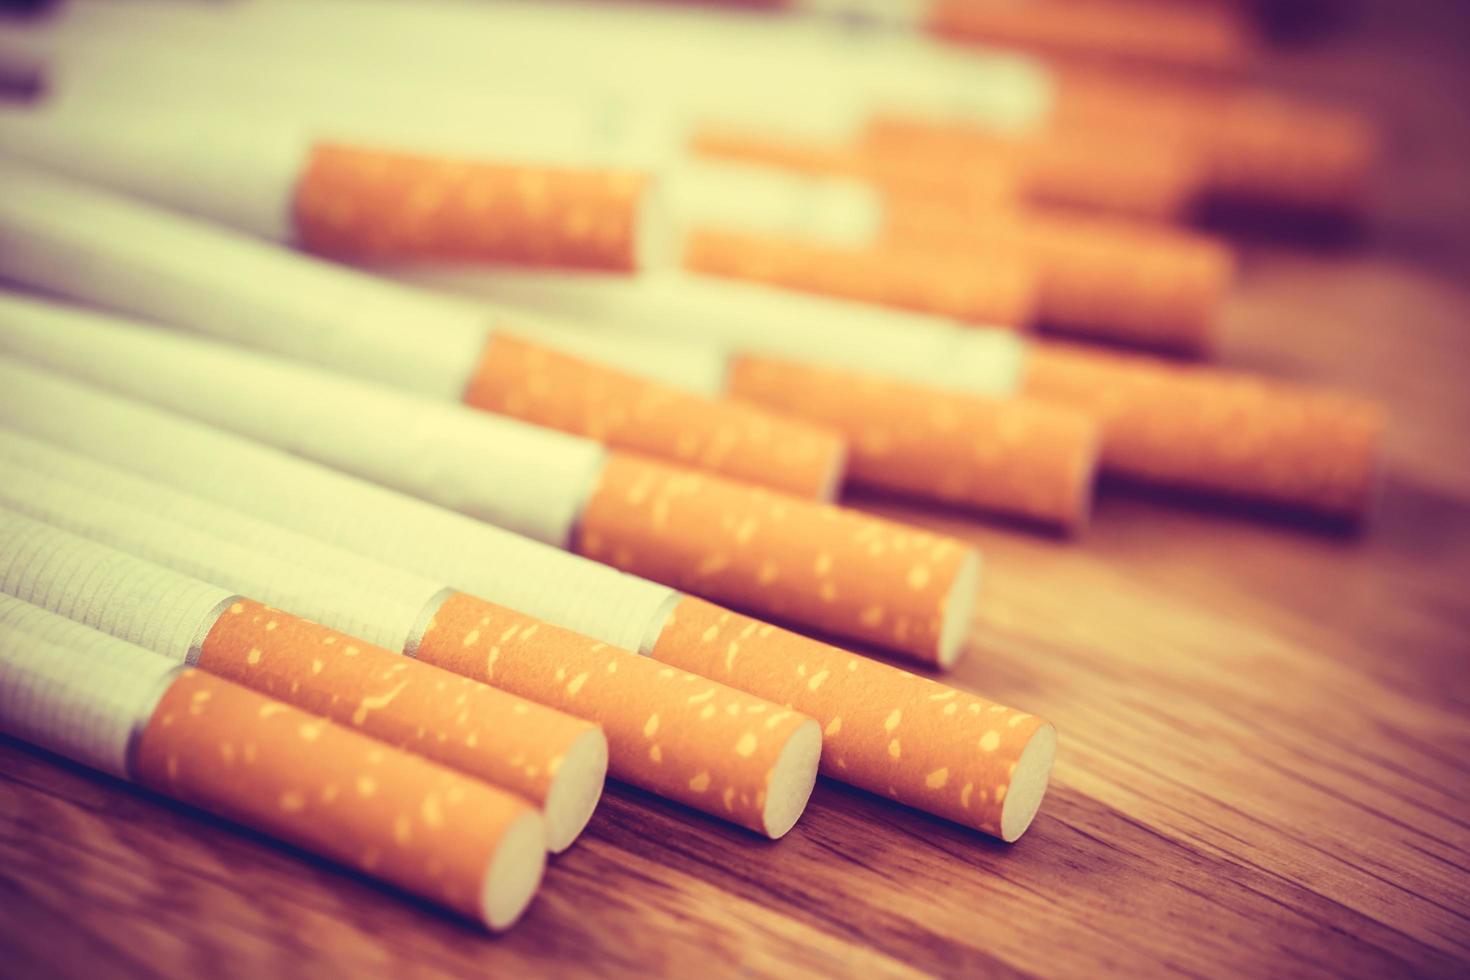 imagen de varios cigarrillos fabricados comercialmente. pila de cigarrillos en madera. o concepto de campaña para no fumadores, tabaco. filtro vintage retro. foto